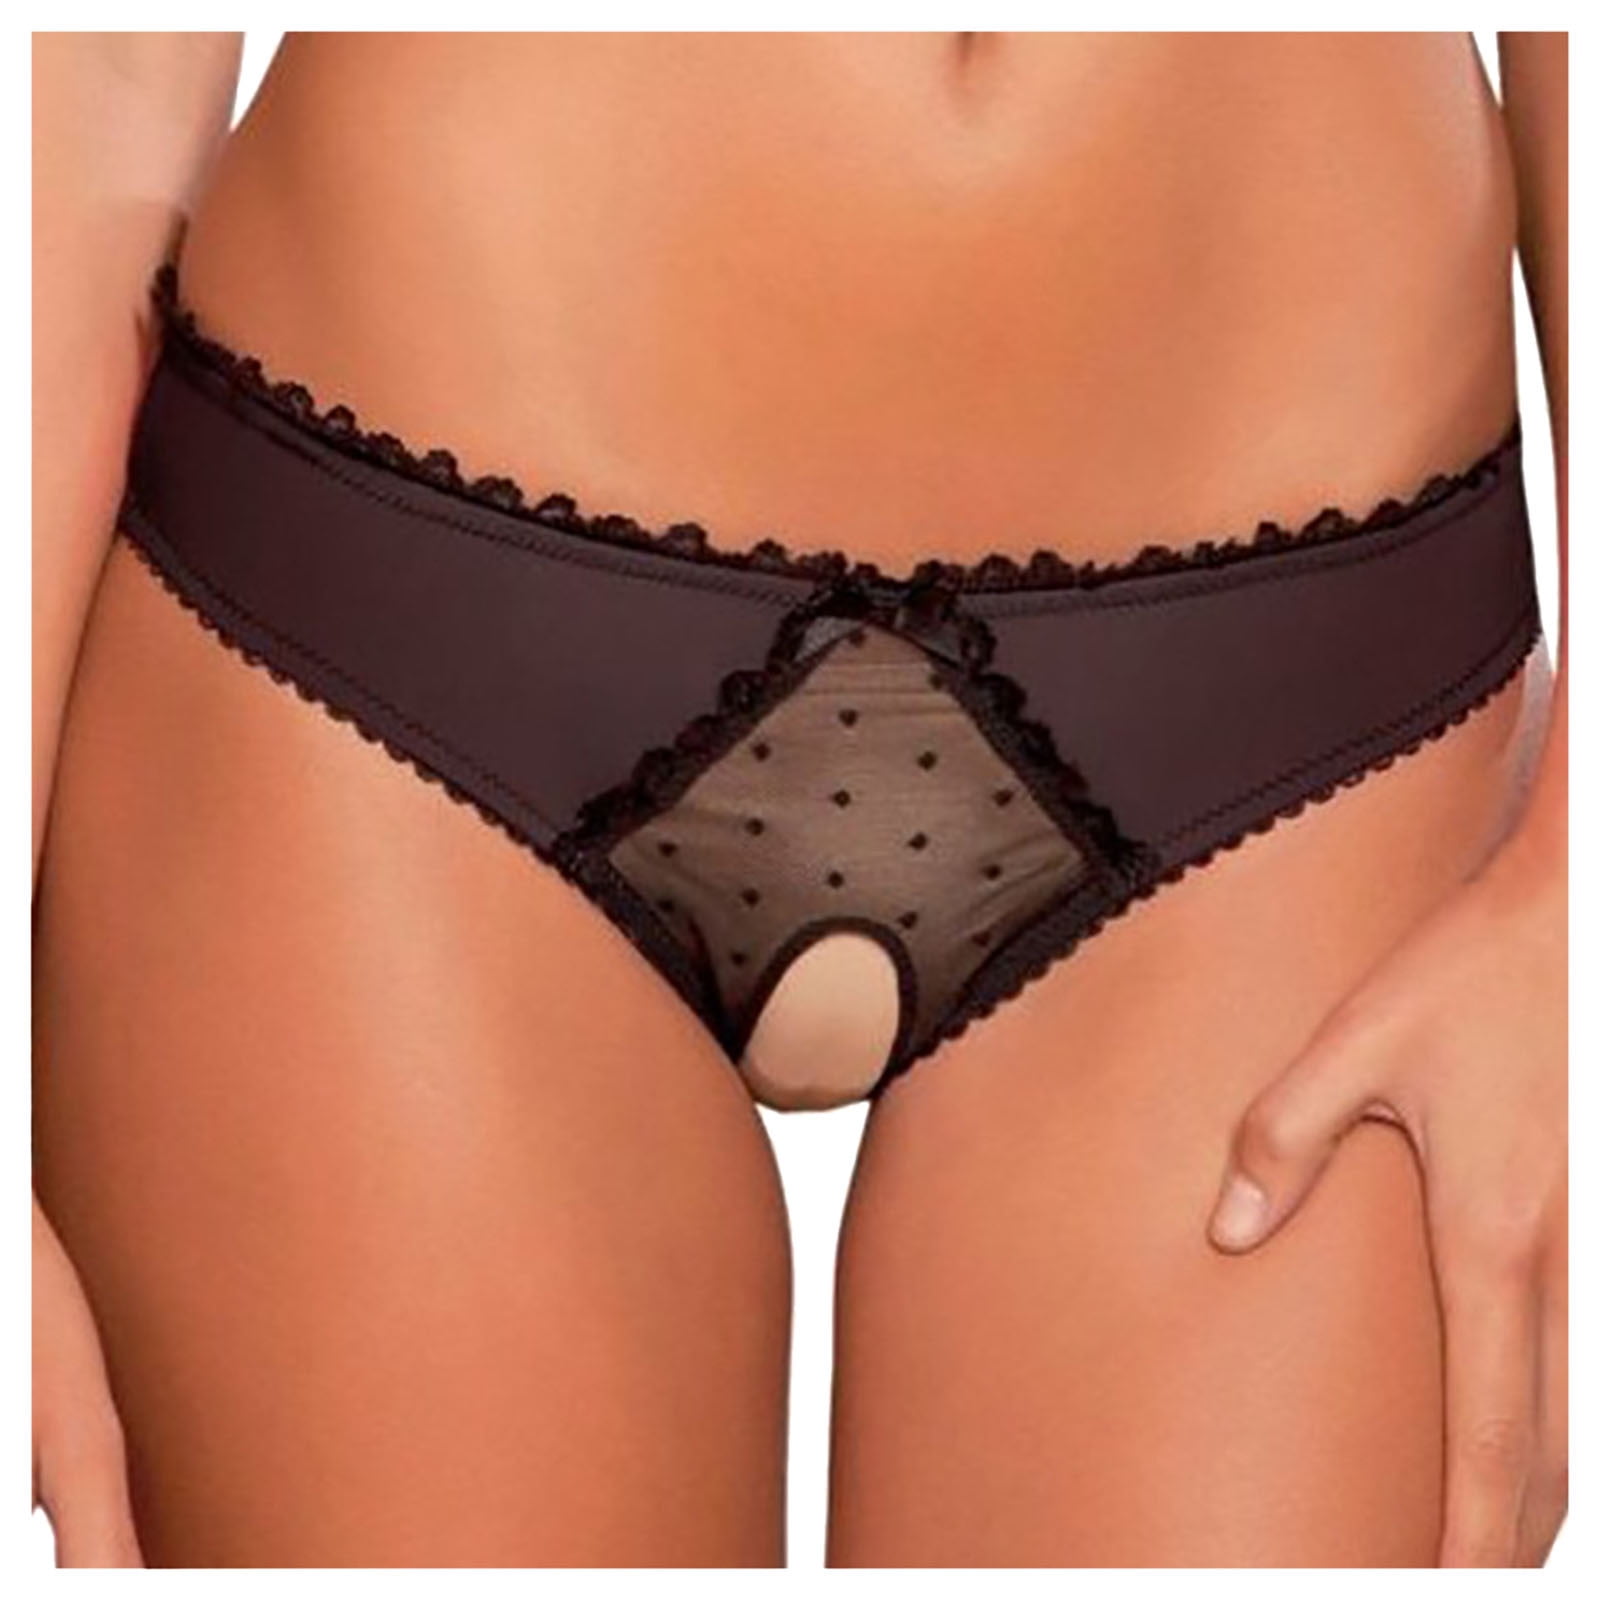 choj yaj recommends purpose of crotchless panties pic